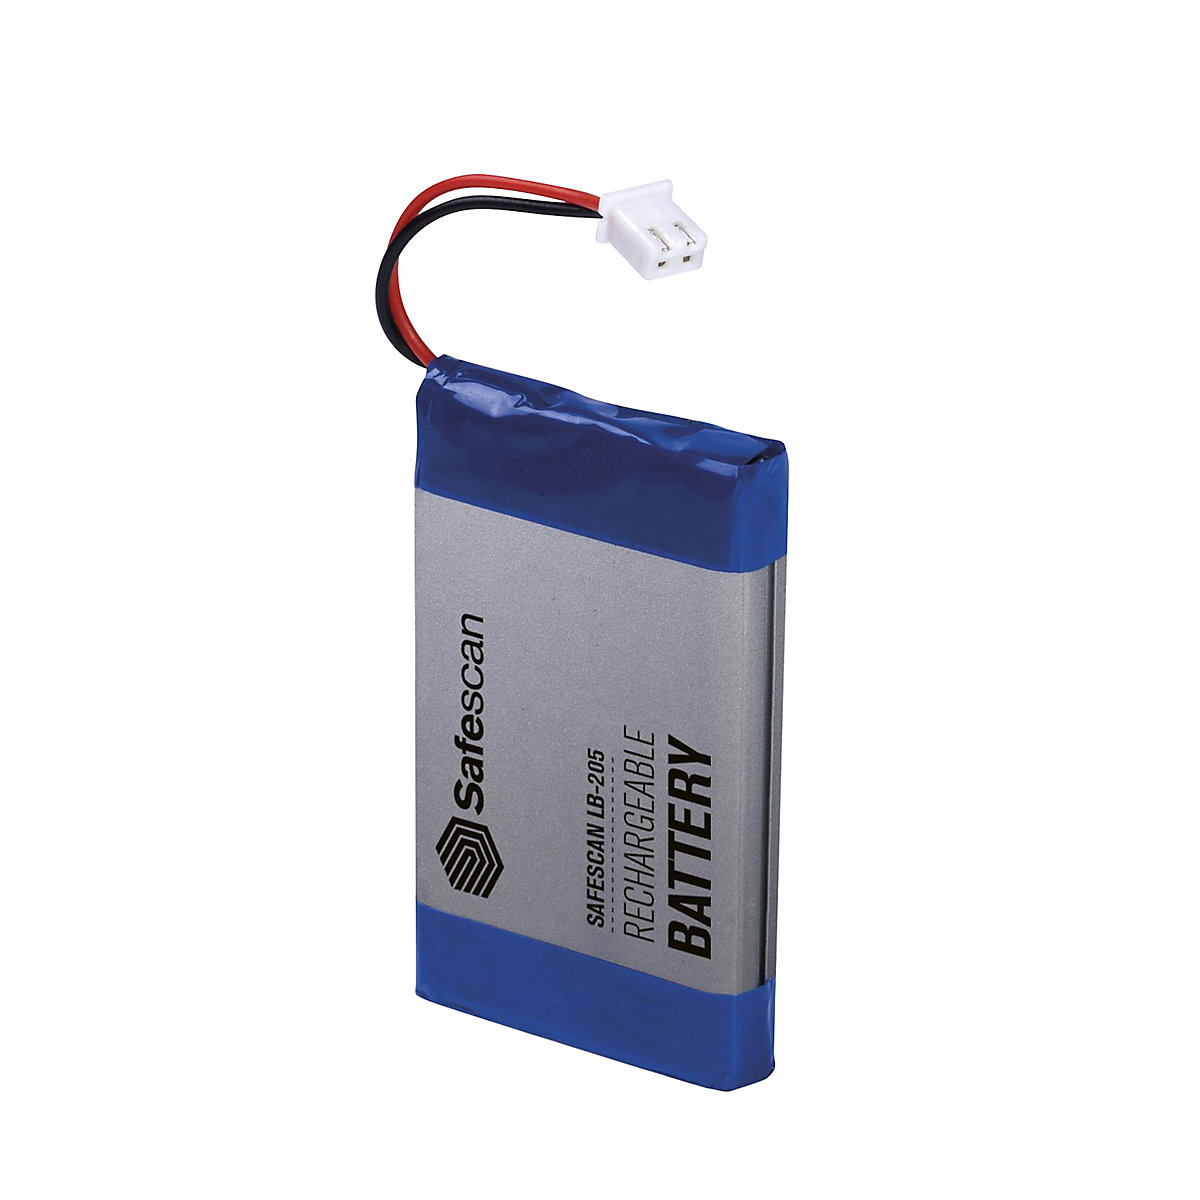 Pile rechargeable – Safescan